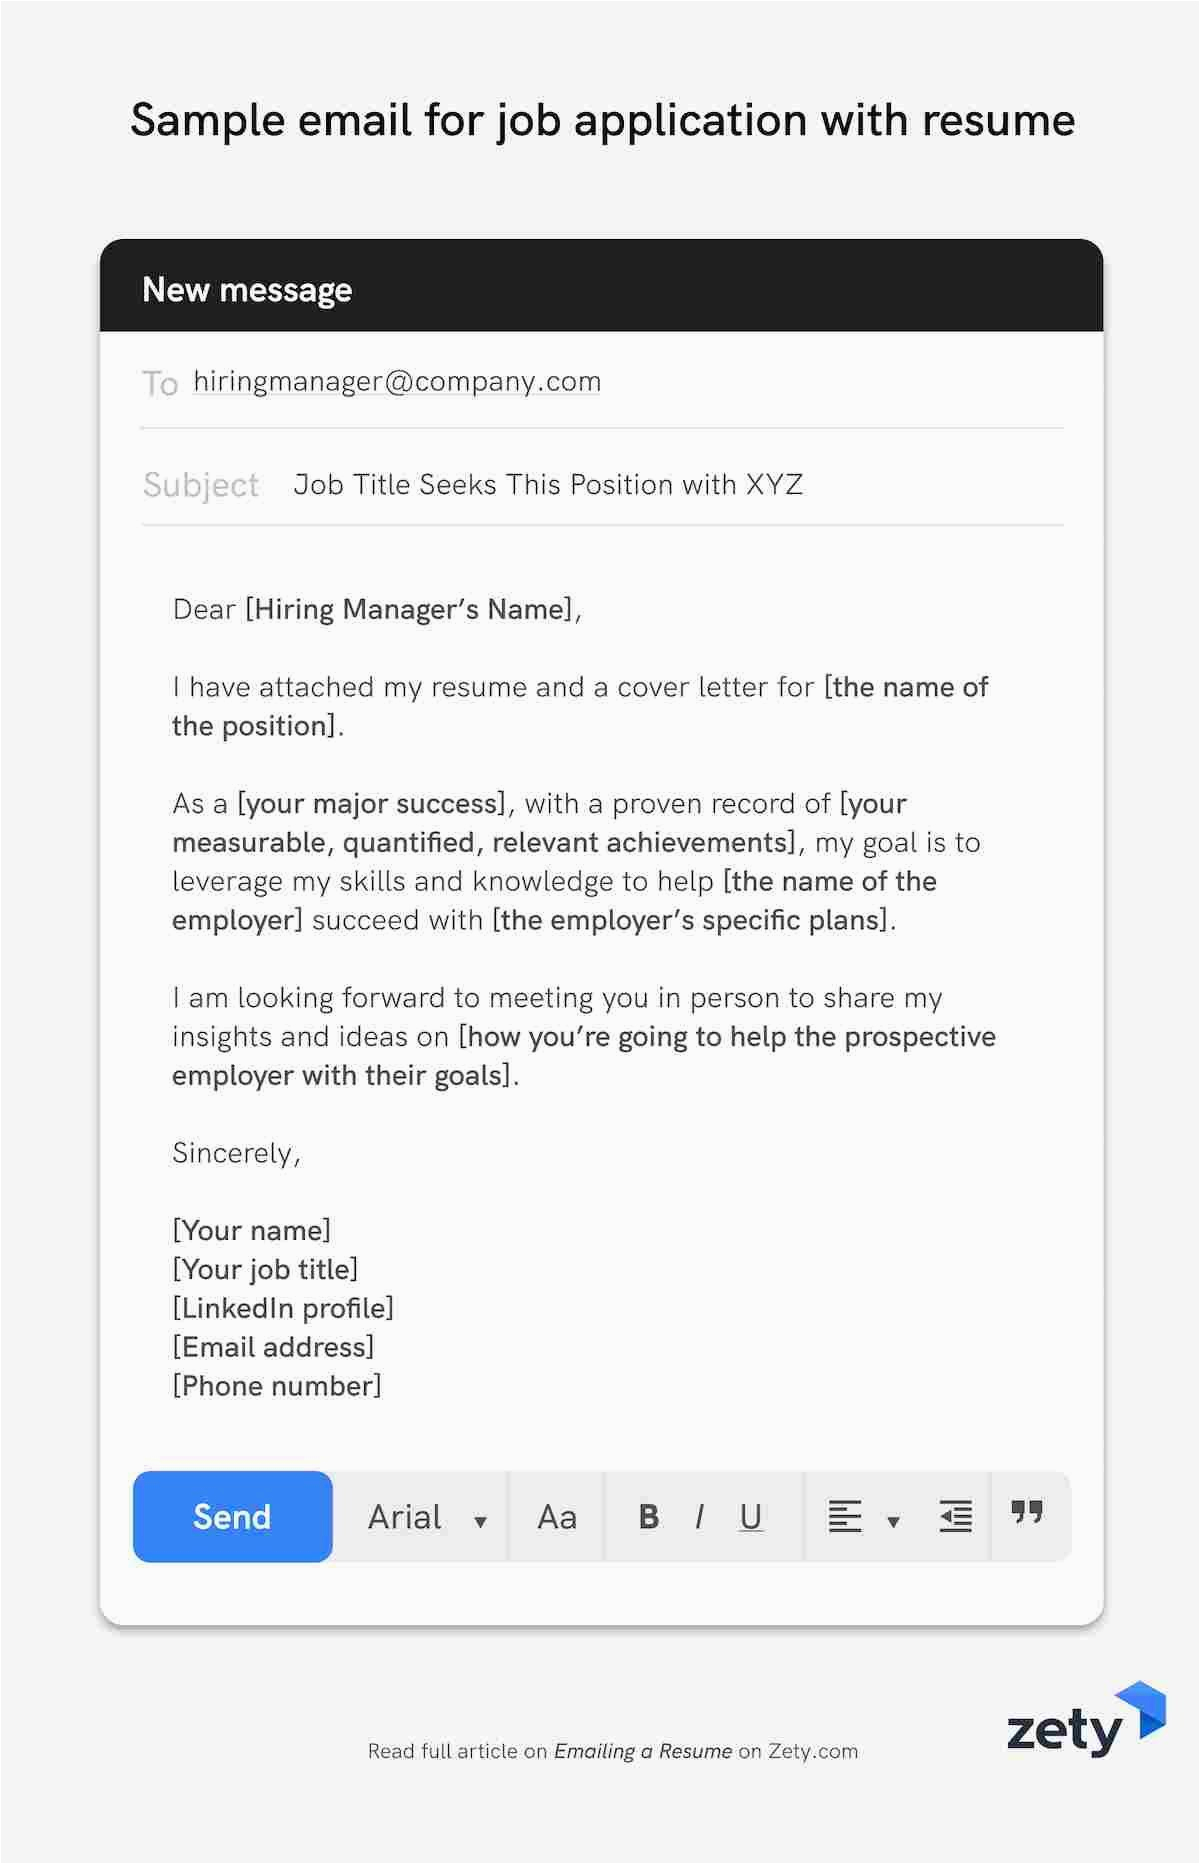 Sample Email Body for Sending Resume Emailing A Resume 12 Job Application Email Samples